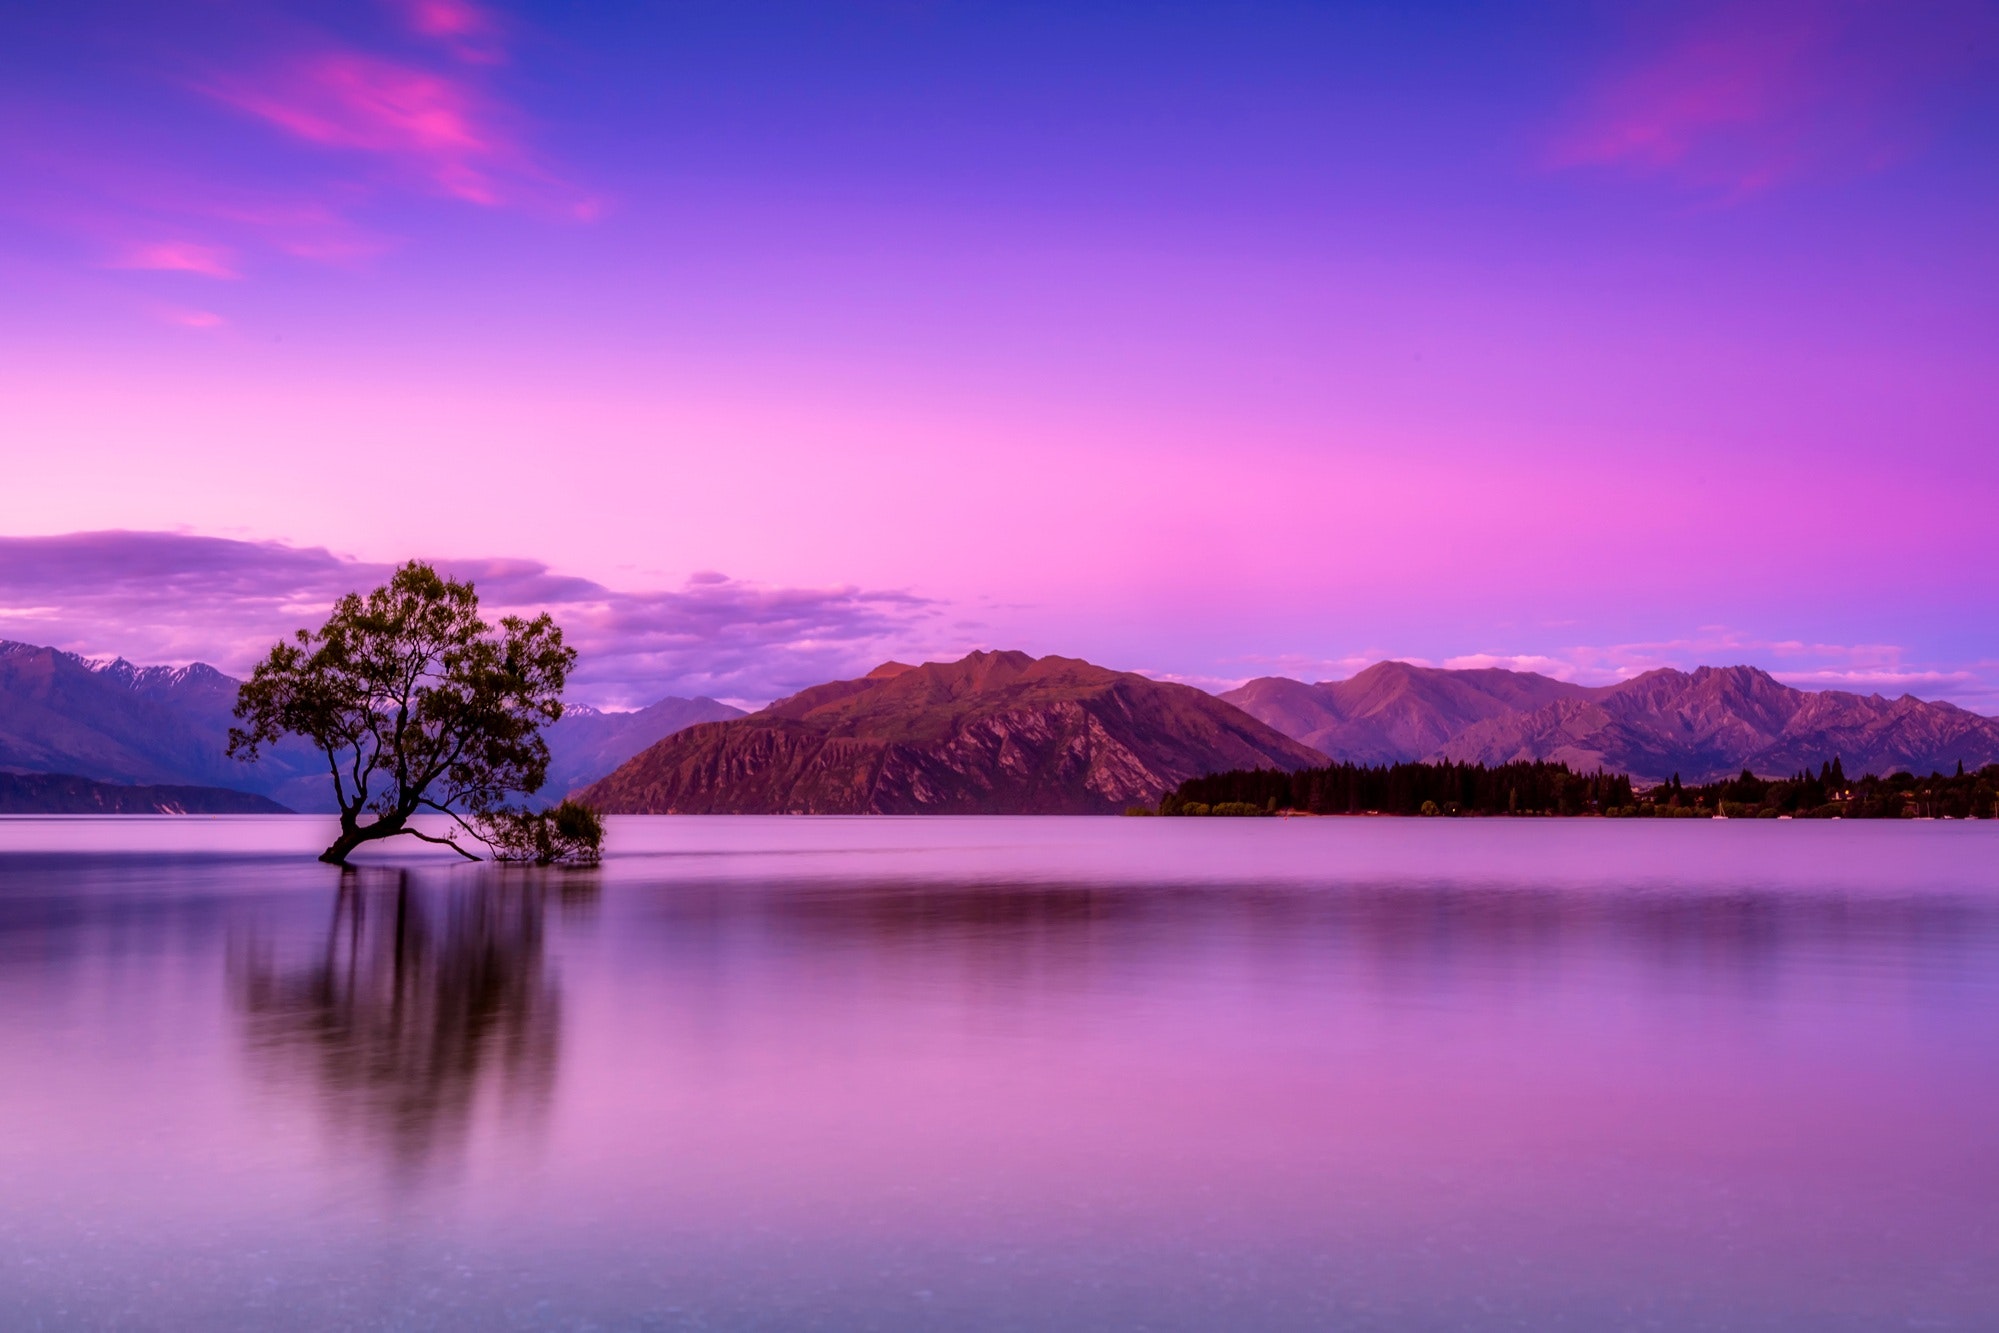 Best Free Beautiful Nature & Image · 100% Royalty Free HD Downloads